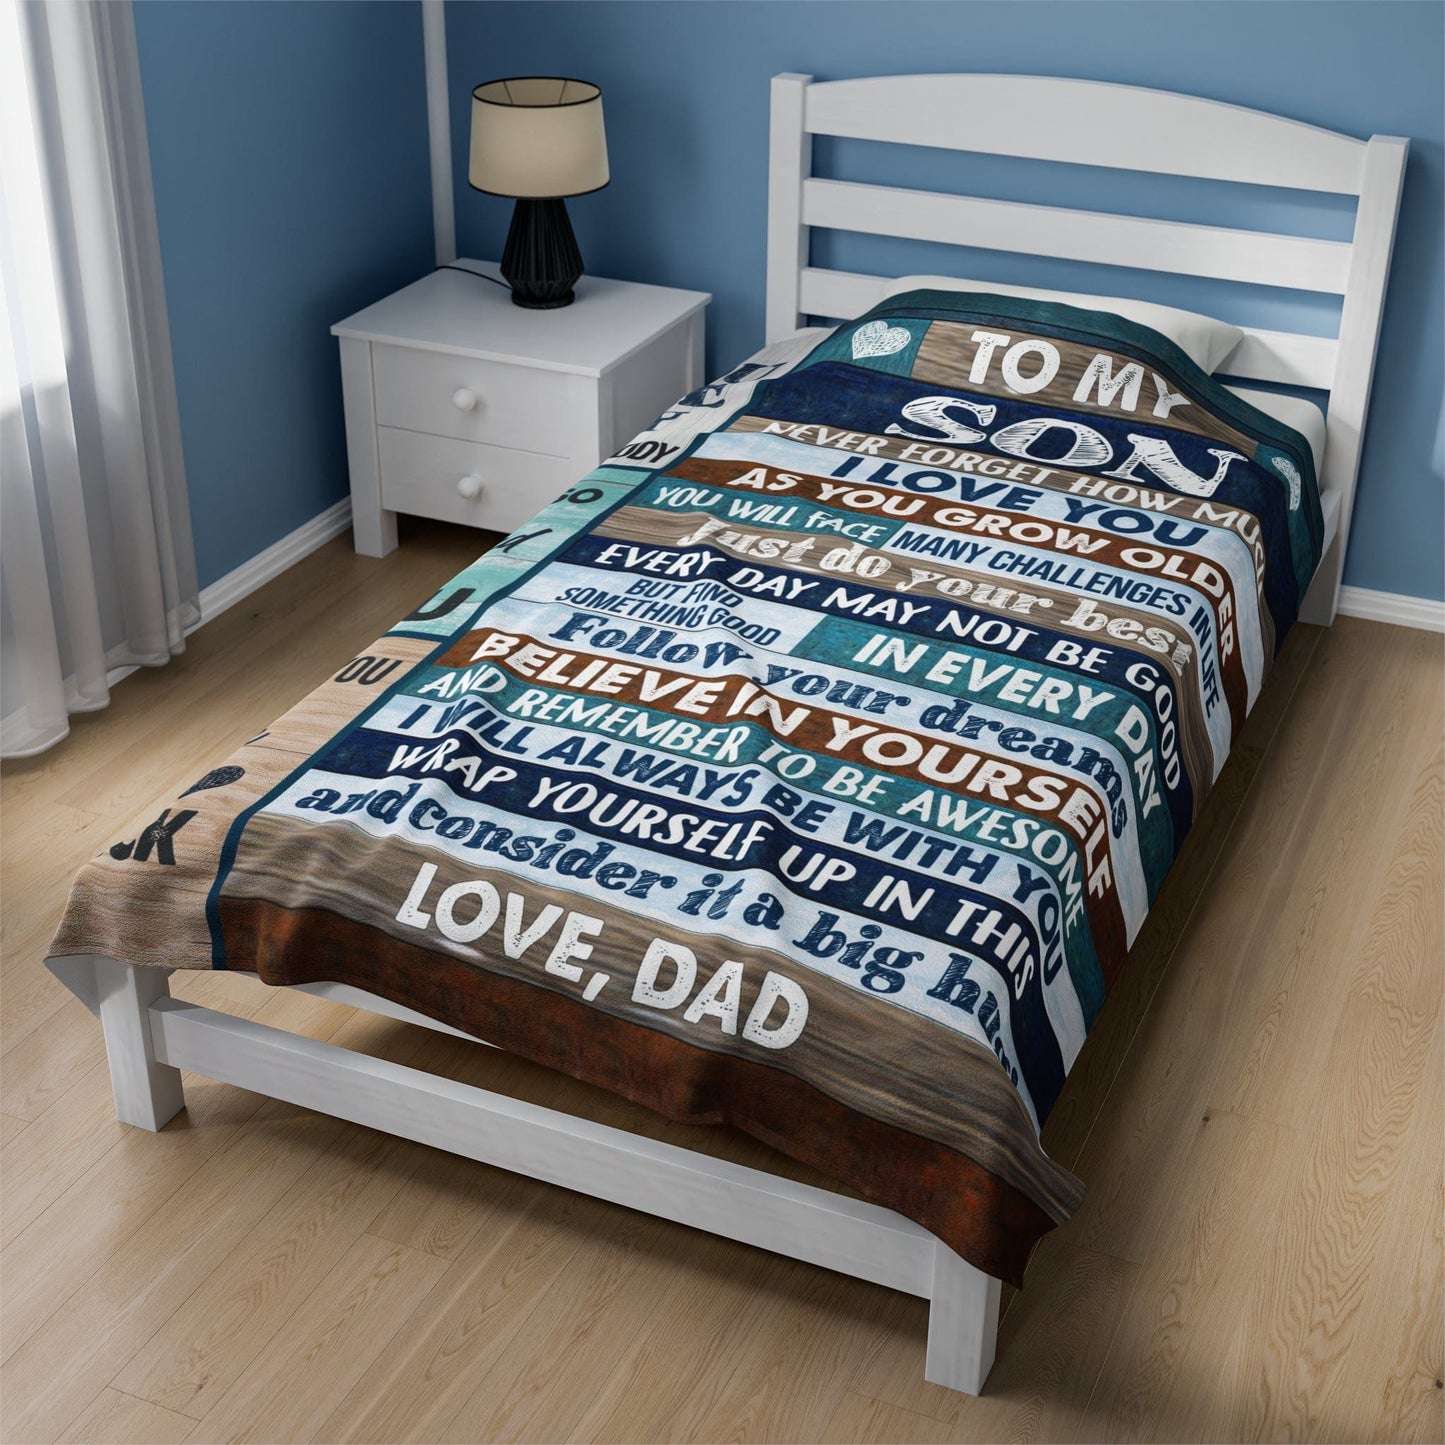 To My Son Love Dad Velveteen Plush Blanket 60x80